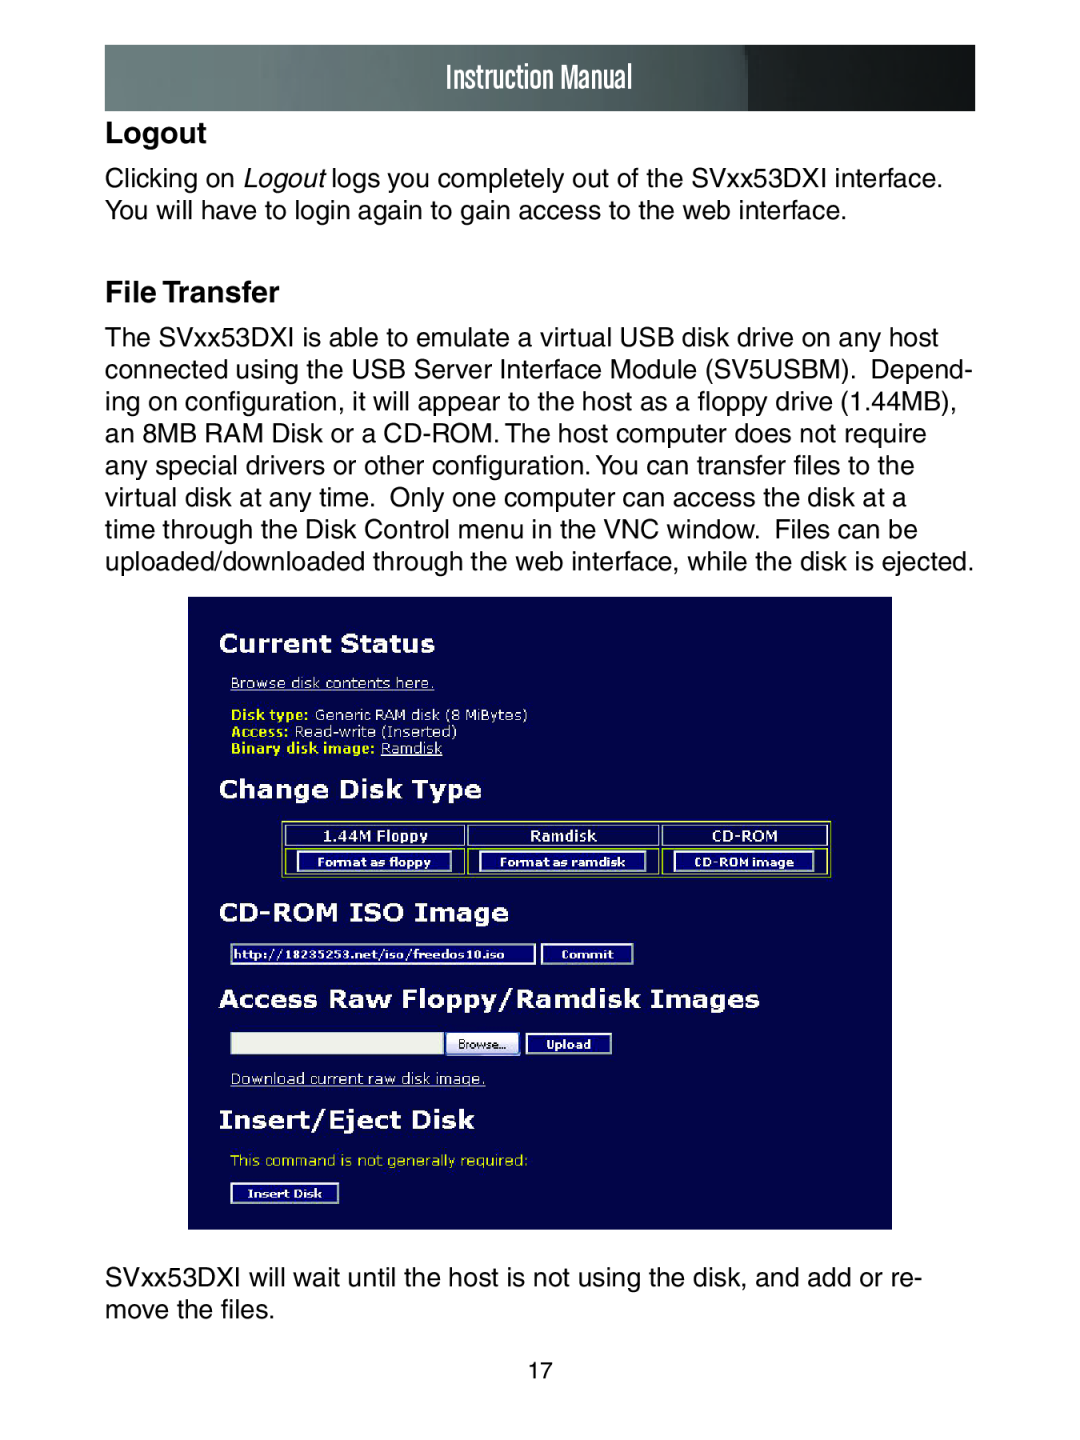 StarTech.com SV1653DXI, SV3253DXI manual Logout, File Transfer, Instruction Manual 